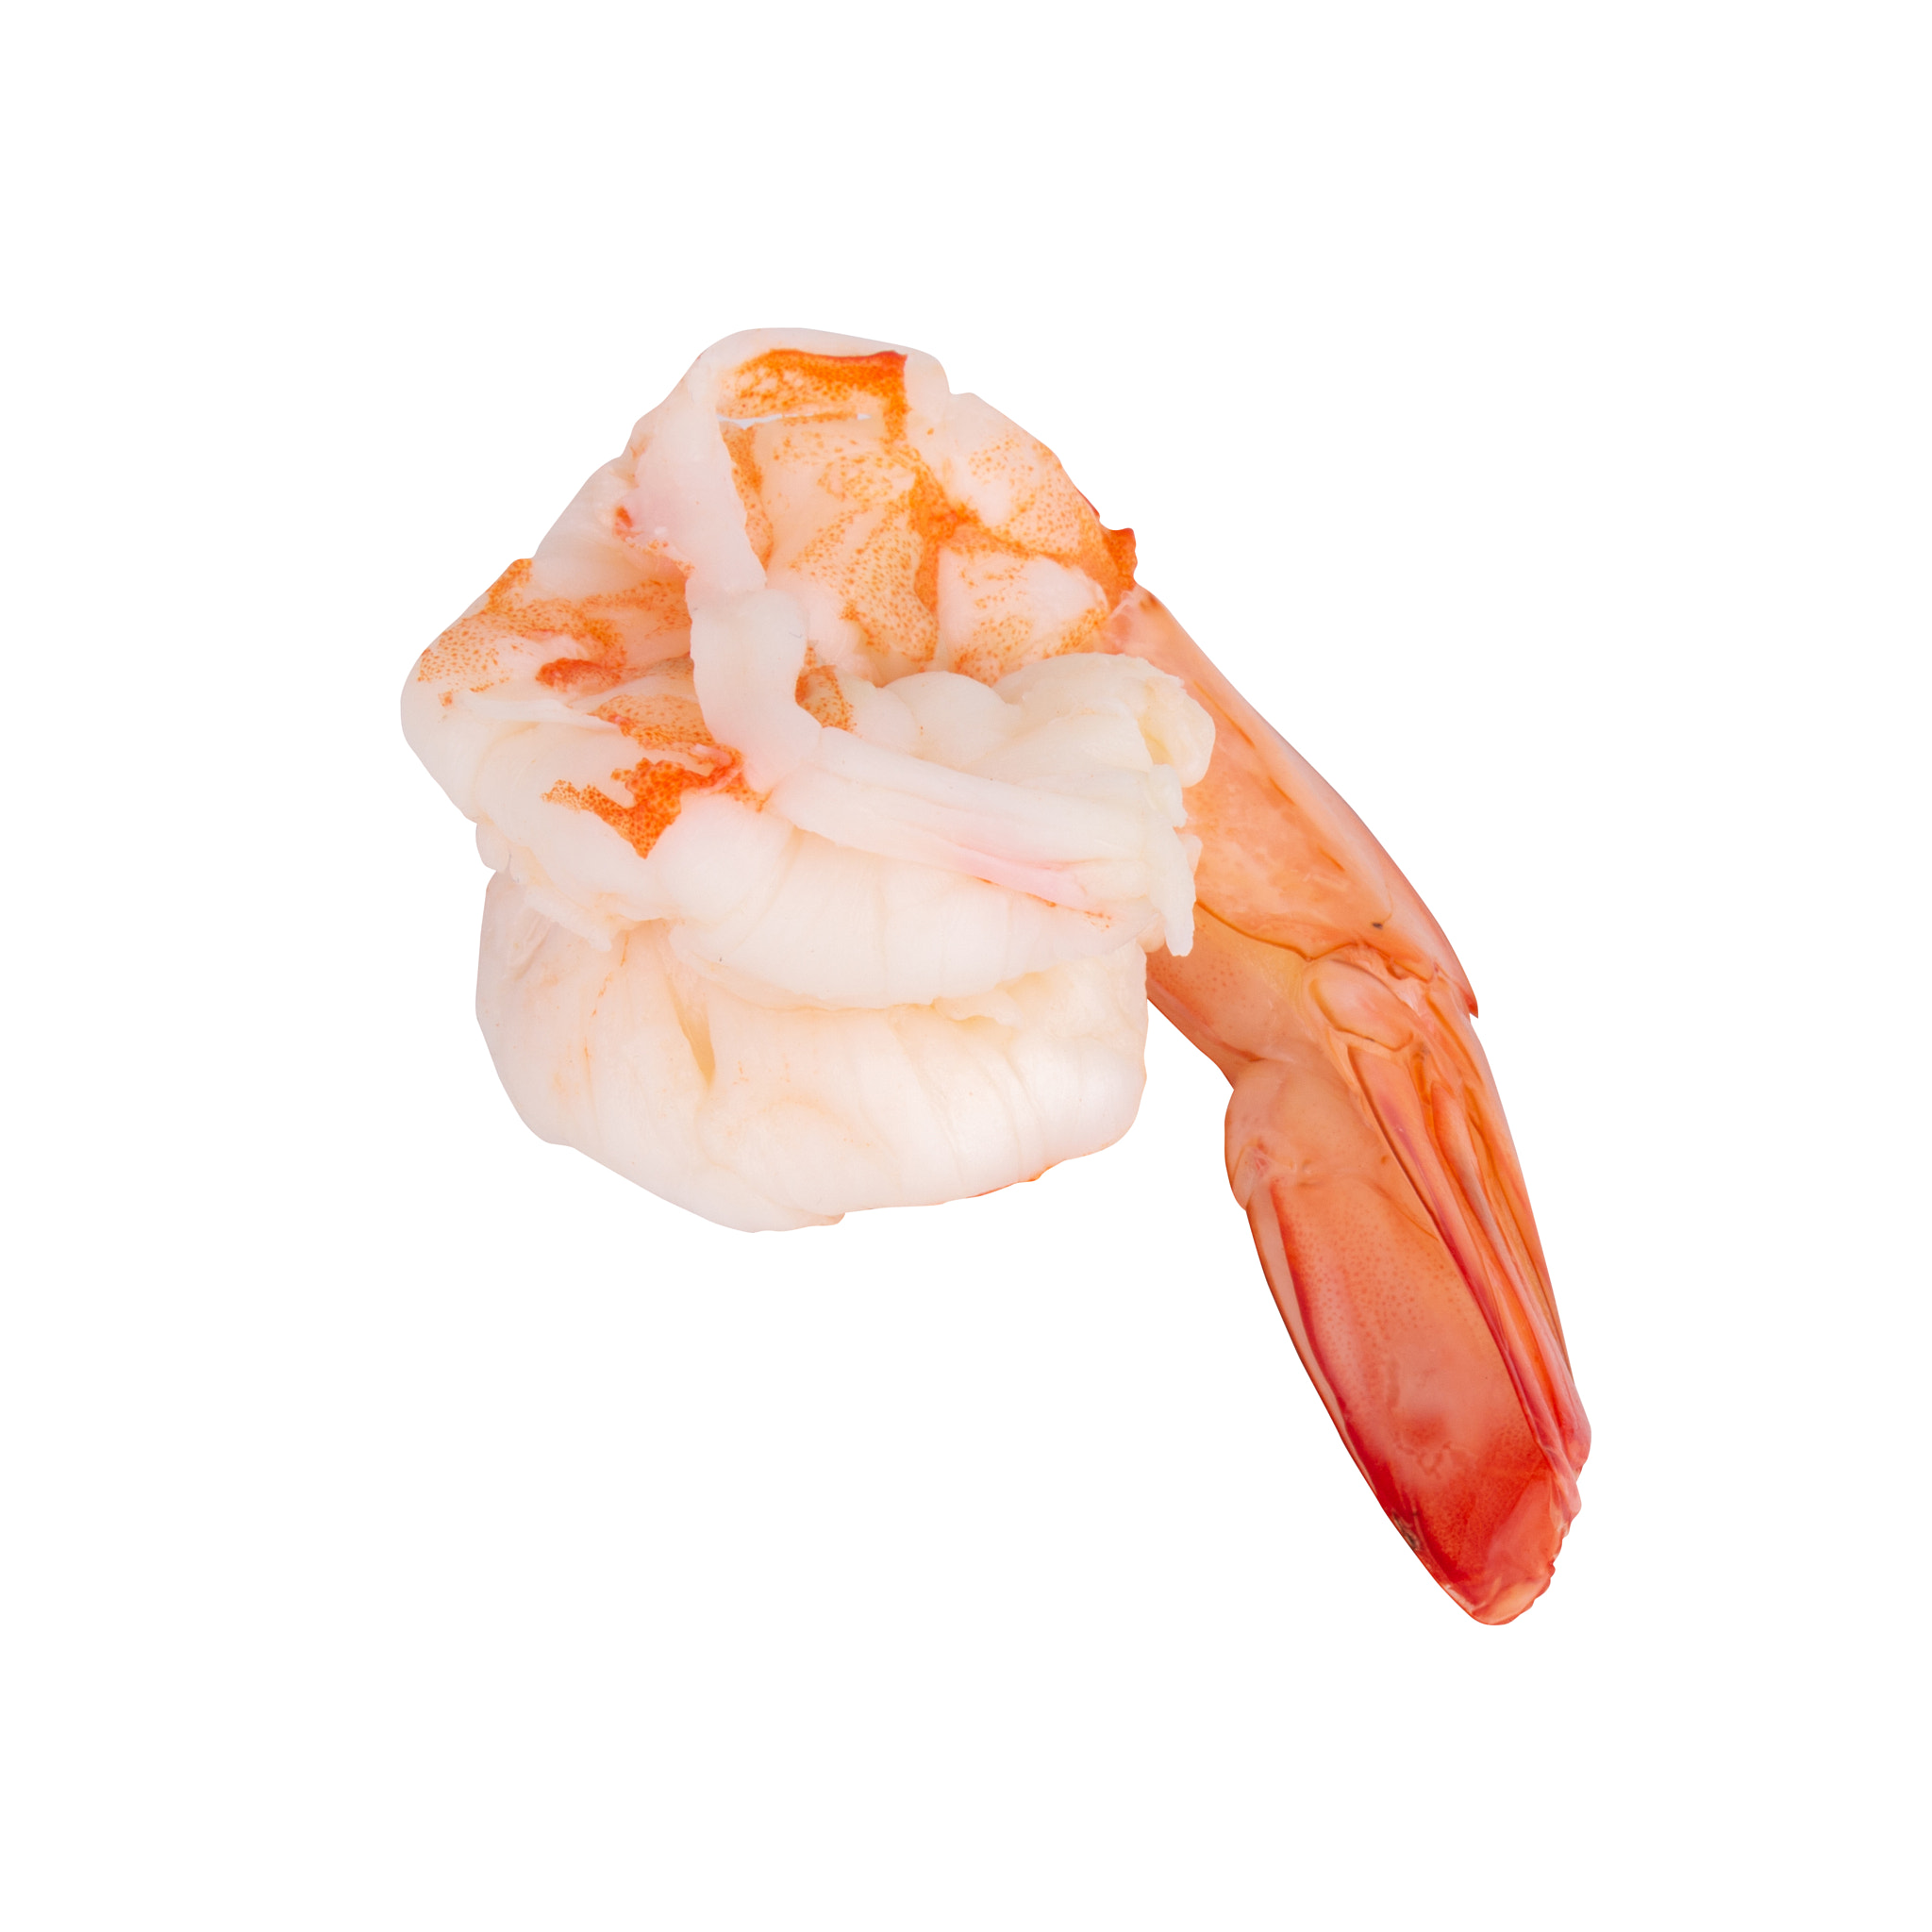 shrimp tail isolated on white background